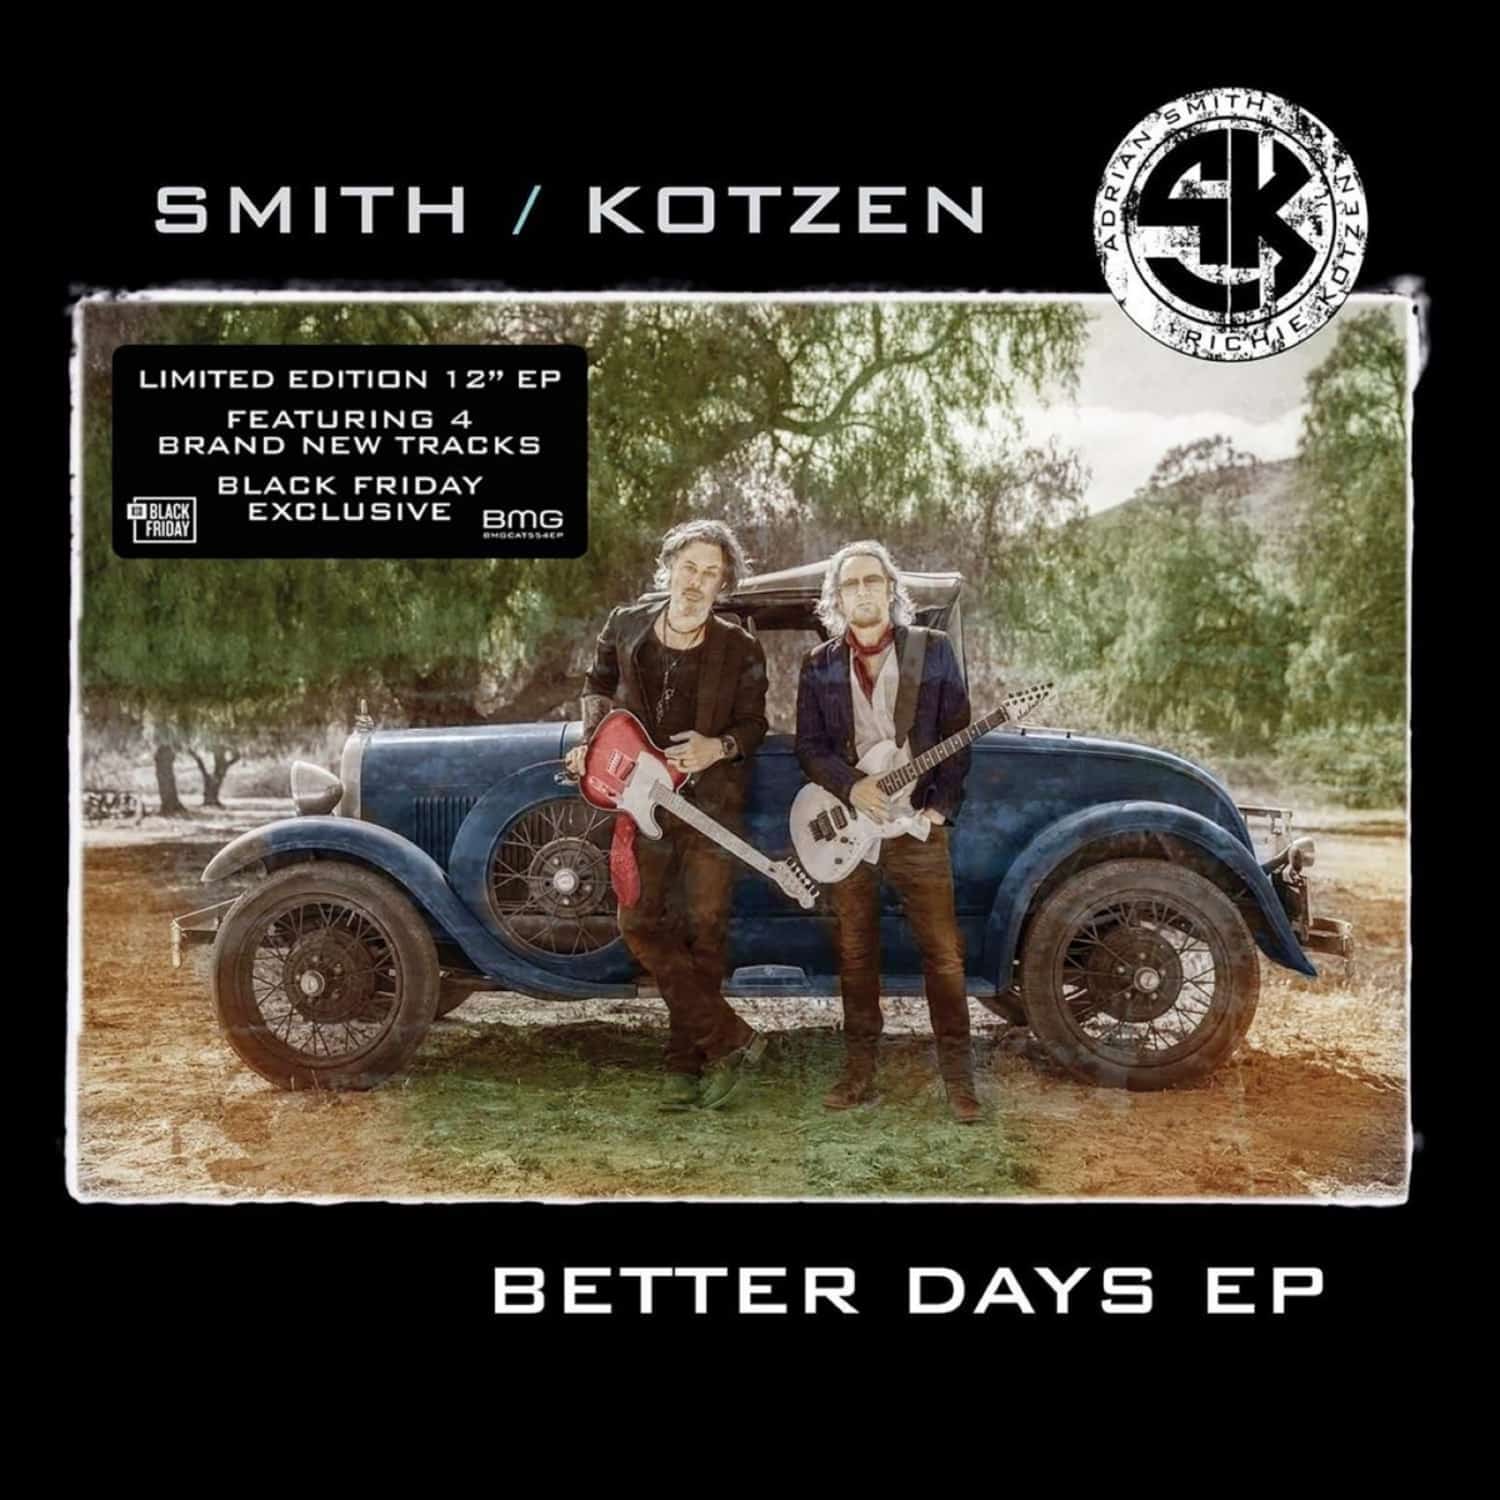 Smith / Kotzen, Adrian Smith, Richie Kotzen - BETTER DAYS EP 